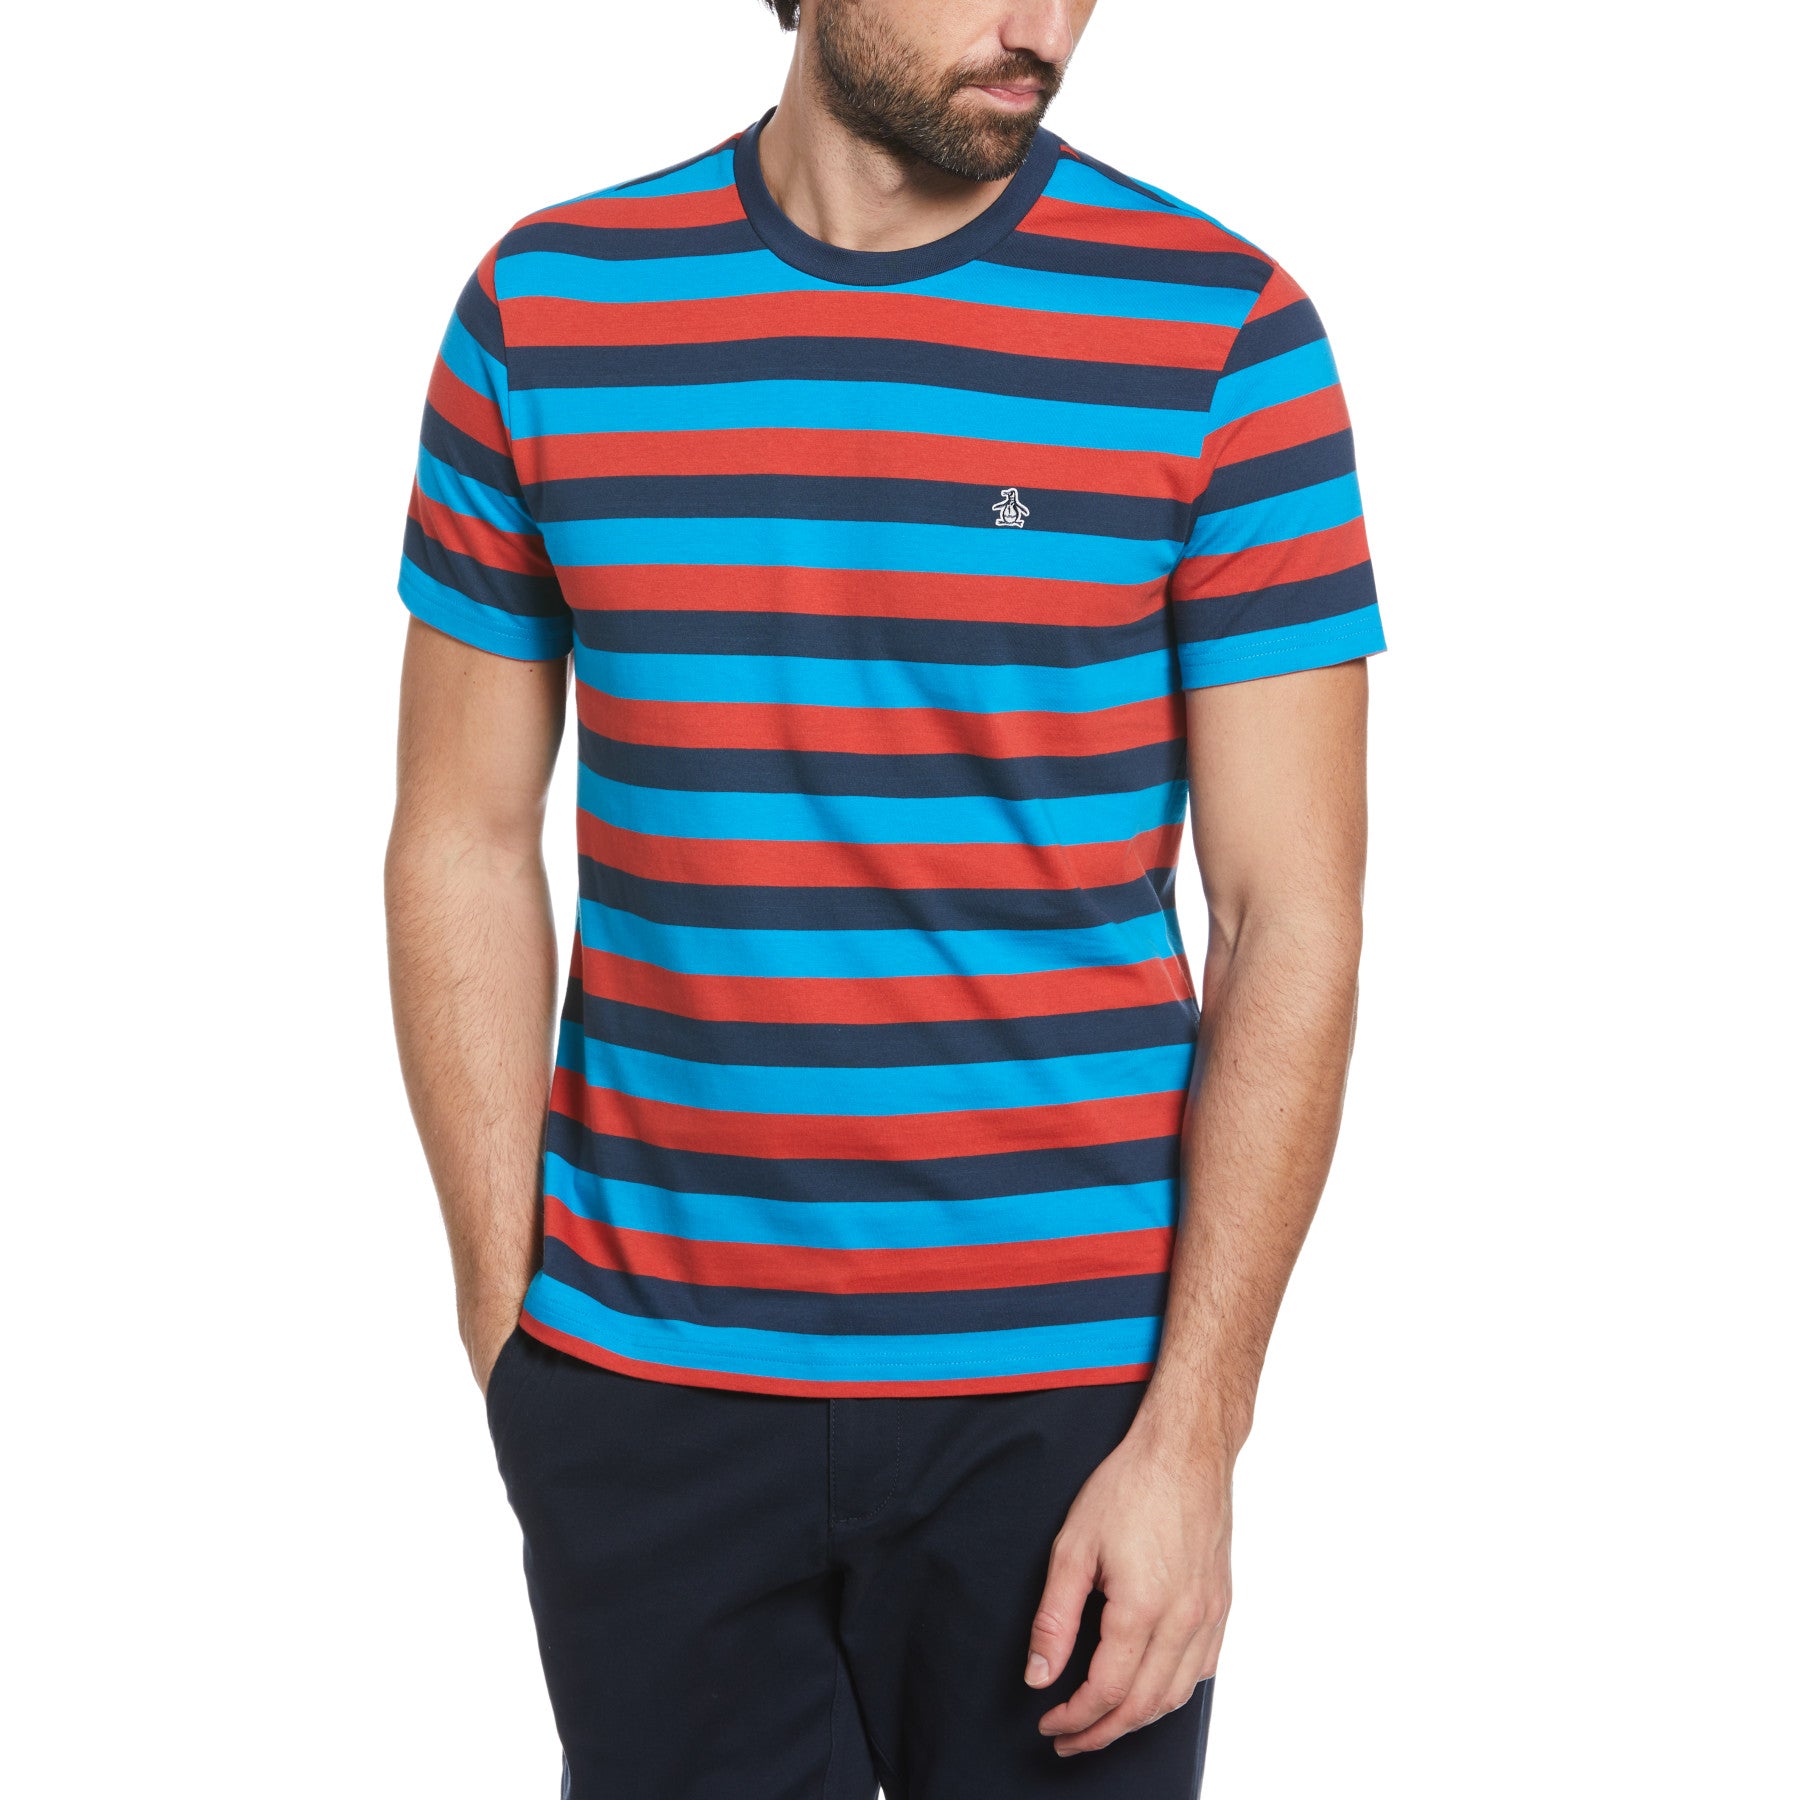 View Allover Stripe Short Sleeve TeeShirt In Dress Blues information